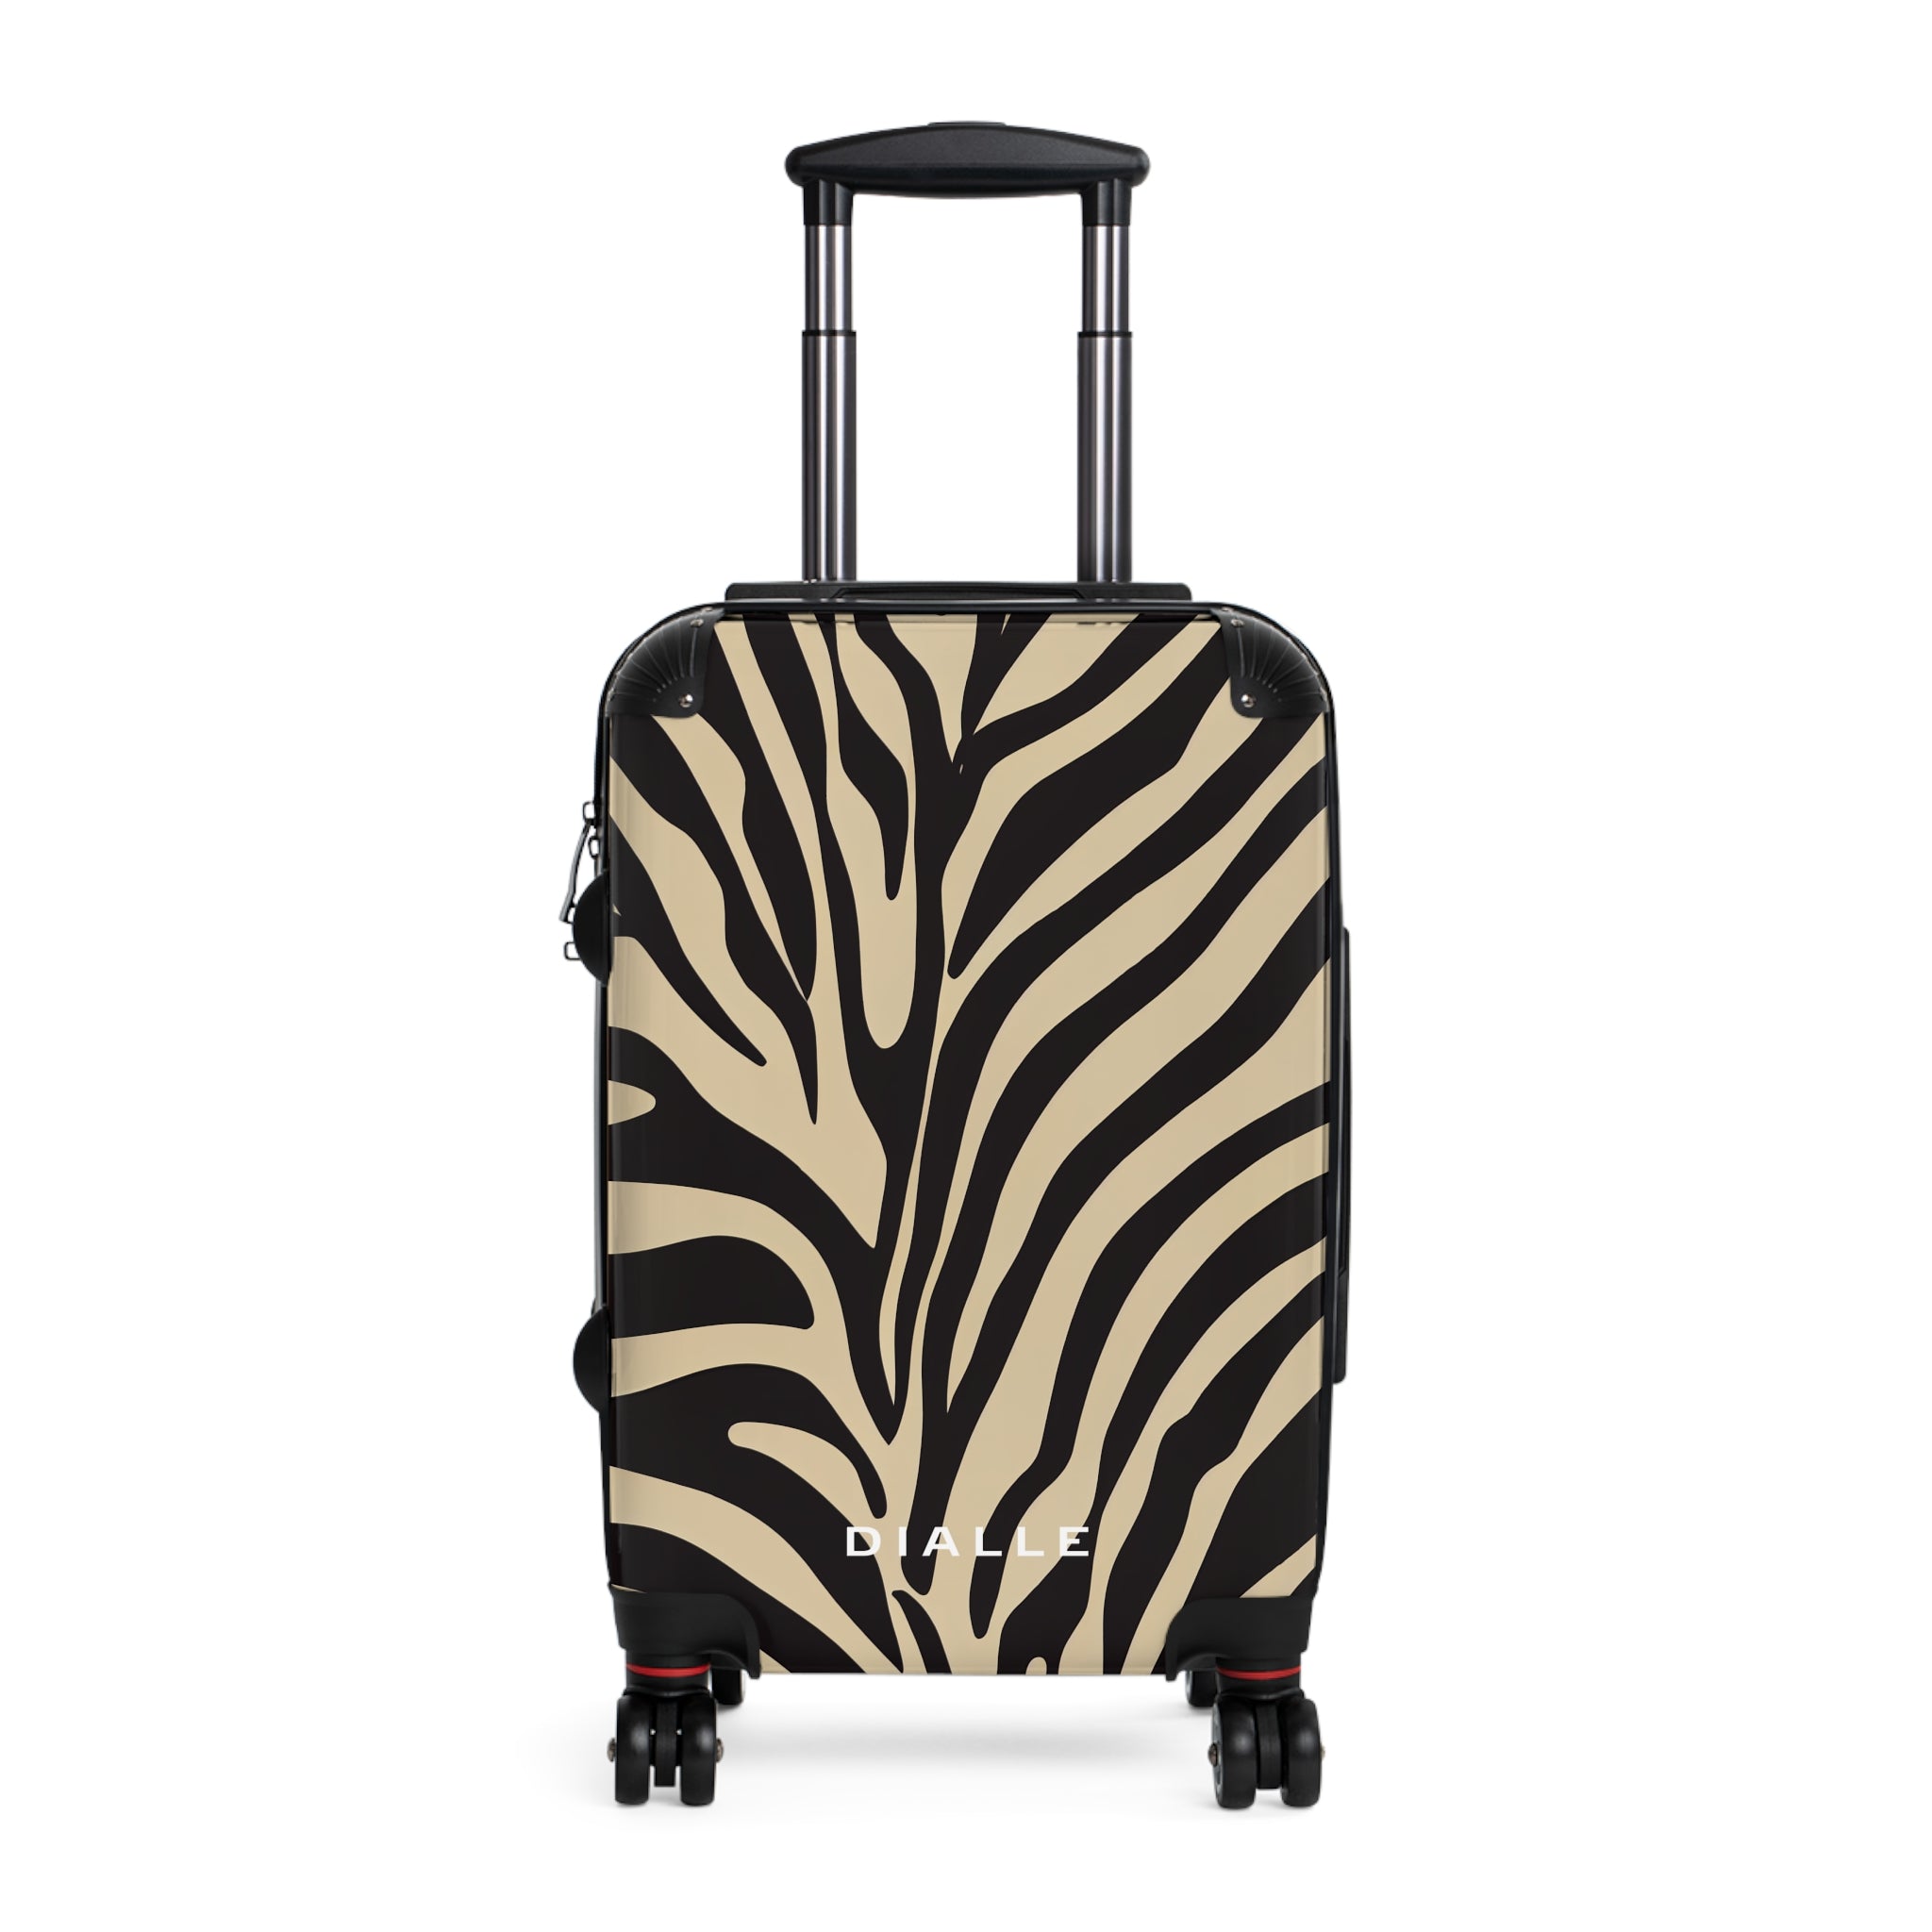 Zebra Chic Suitcase